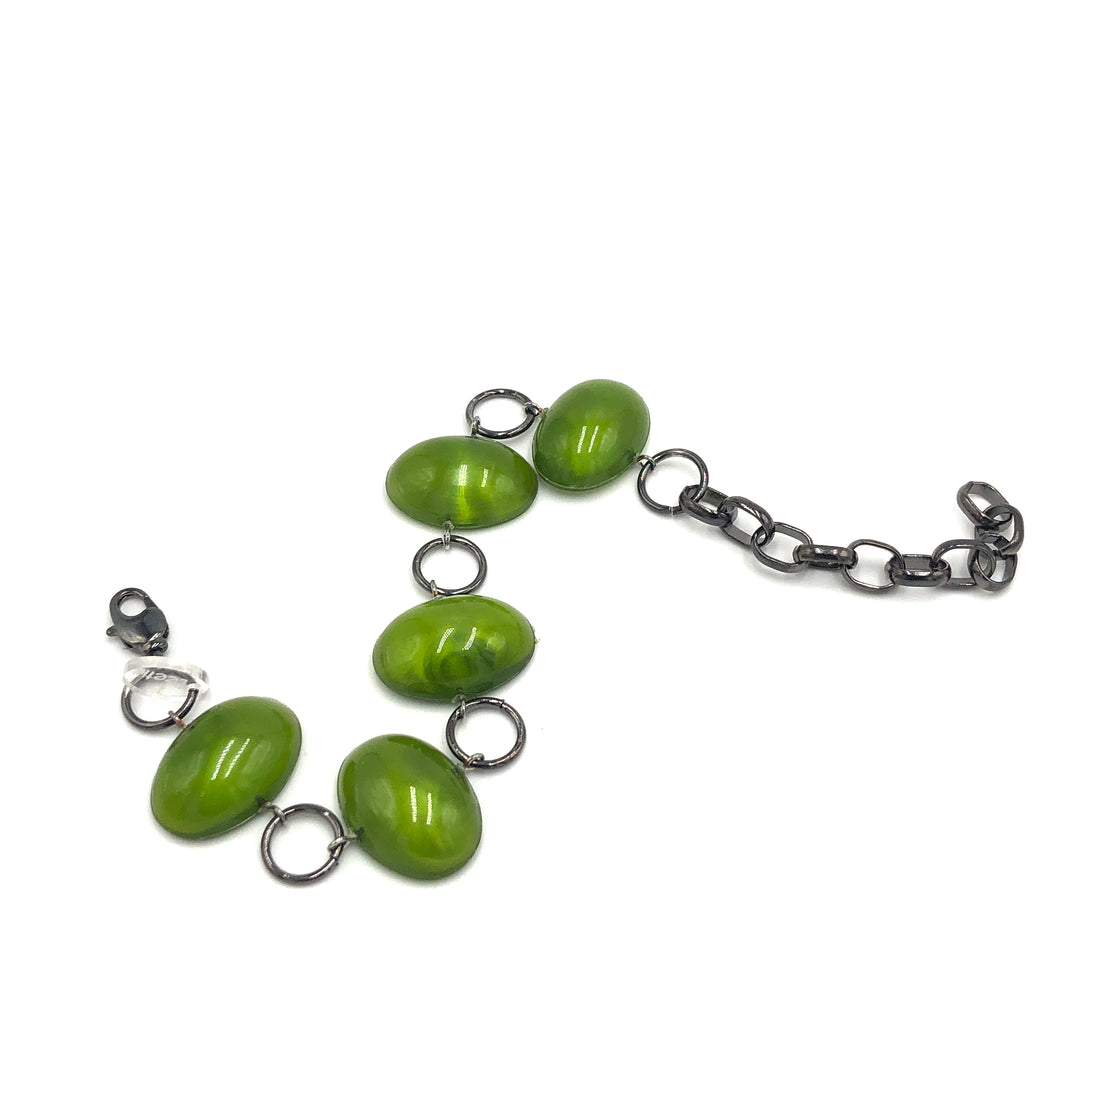 Olive Green Jelly Bean Stations Bracelet